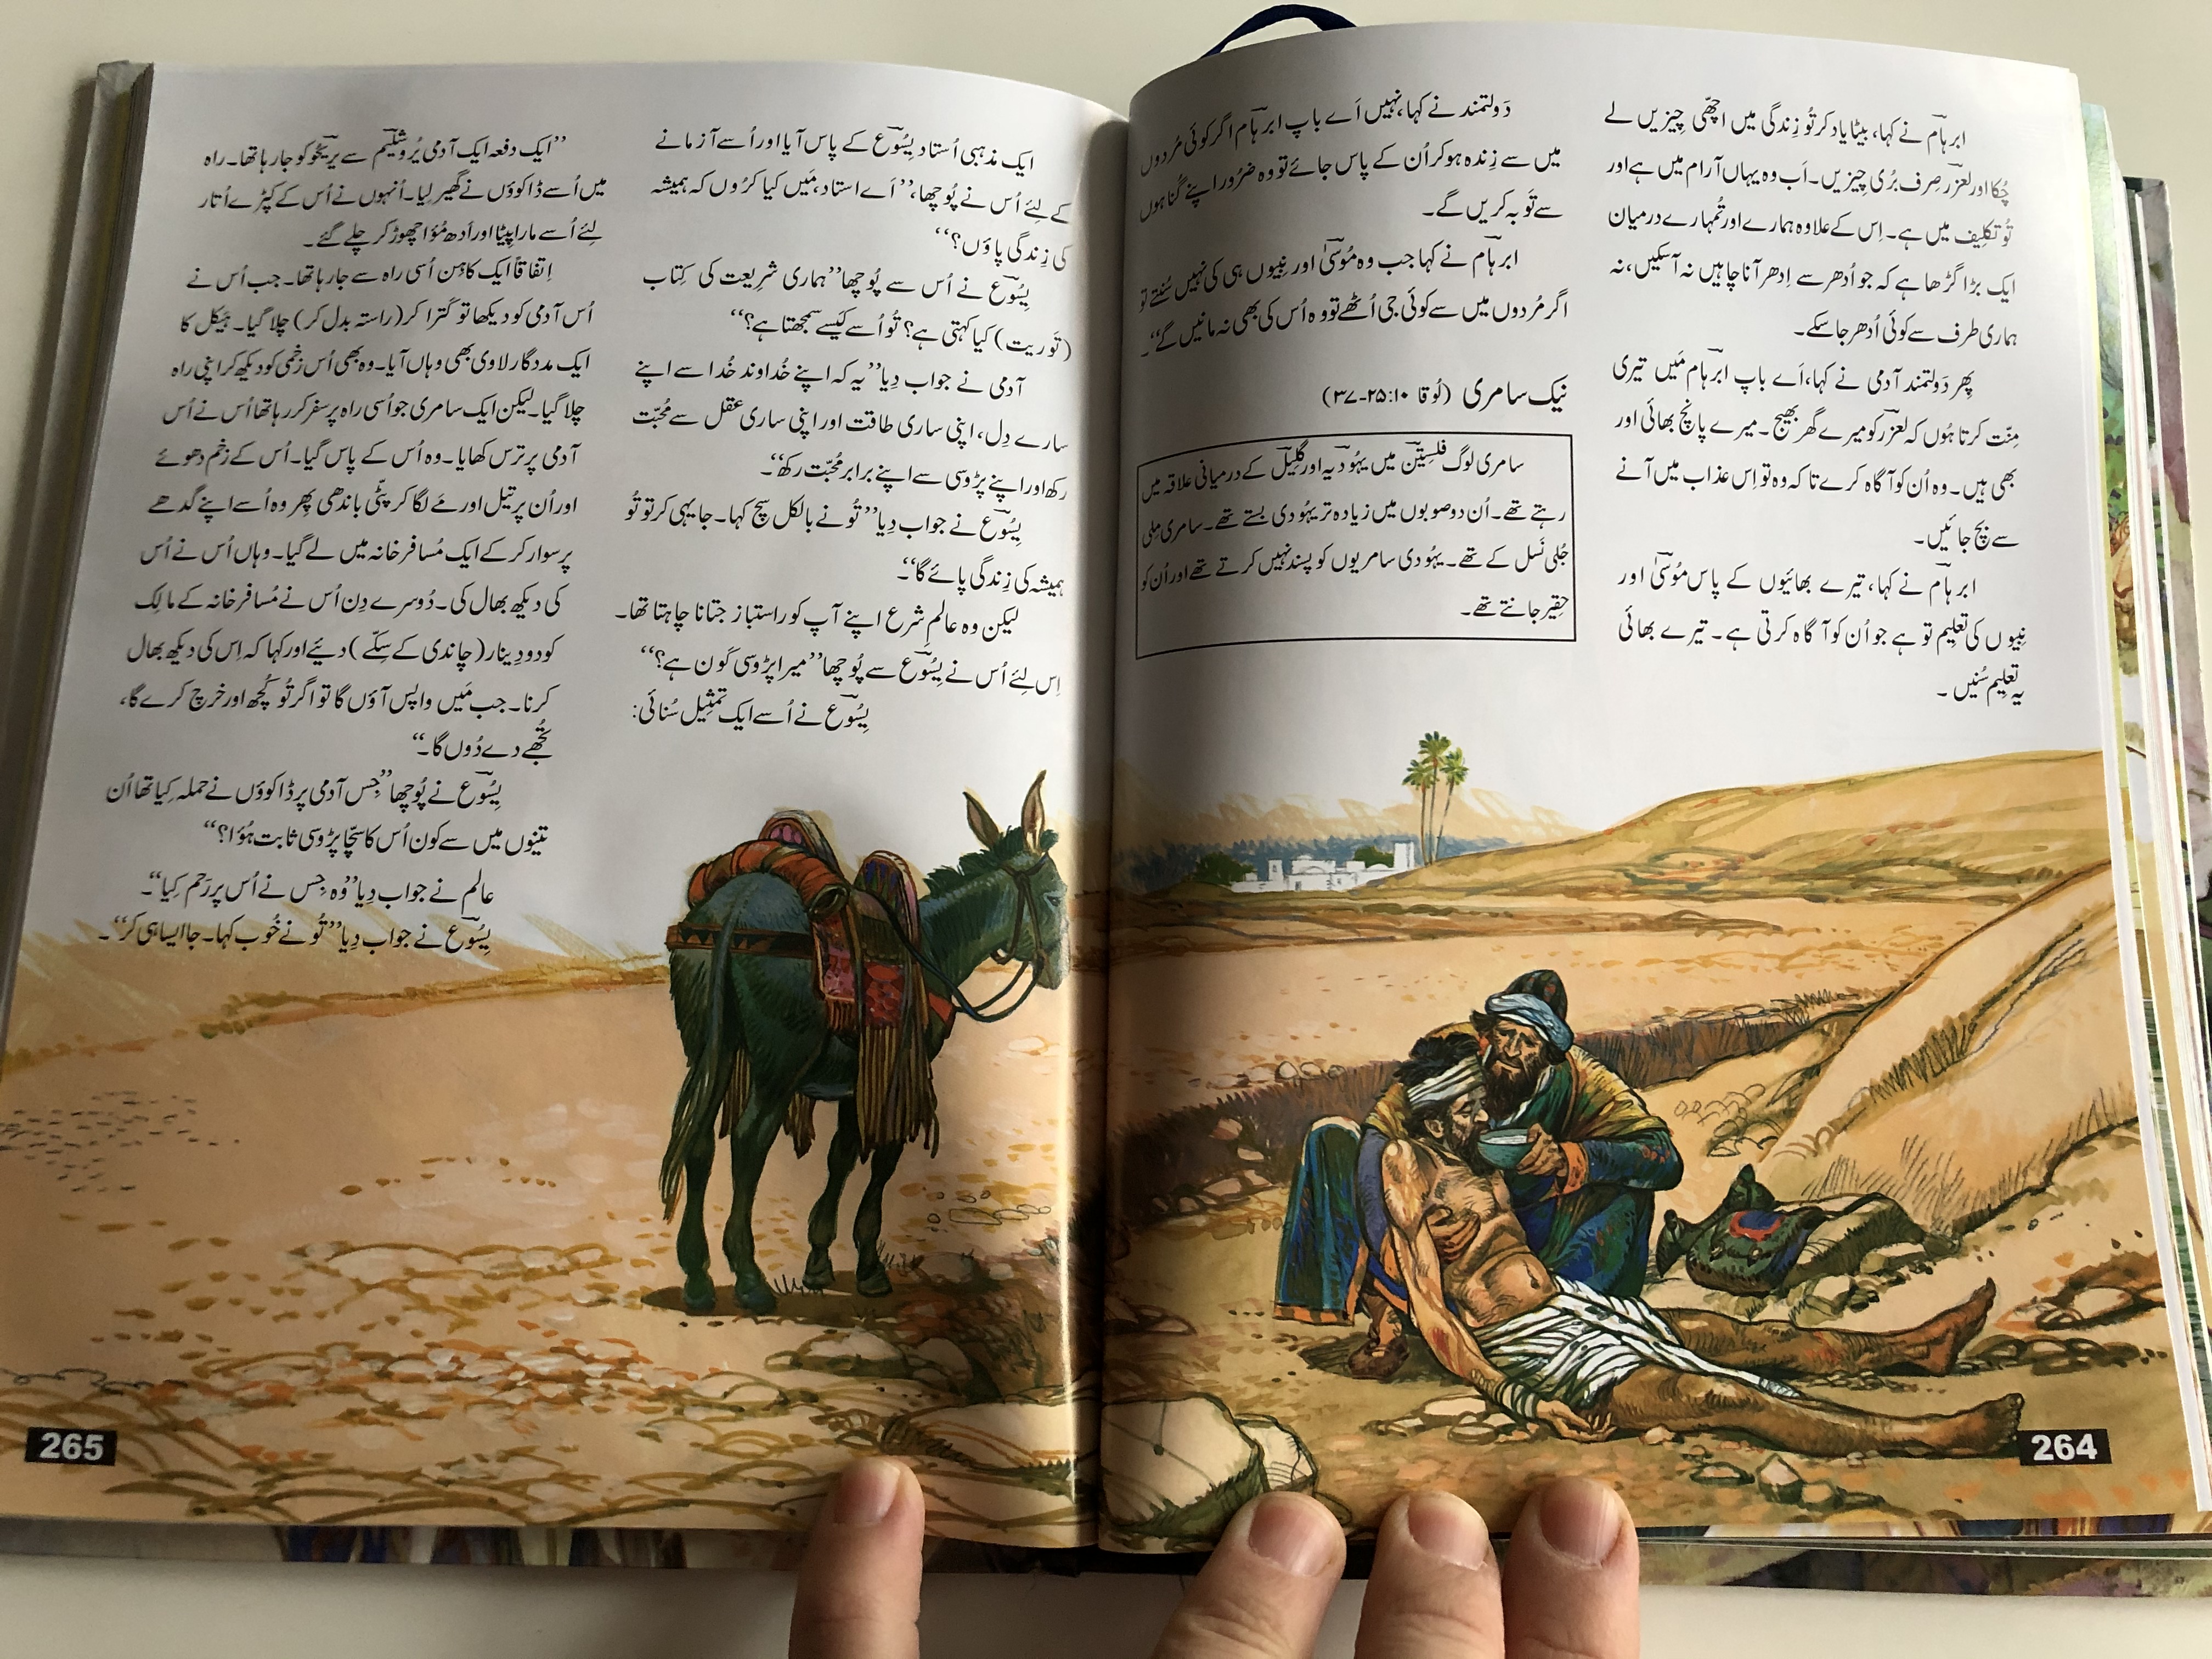 -the-children-s-bible-in-urdu-persian-pakistan-bible-society-2019-illustrated-by-jose-montero-9-.jpg